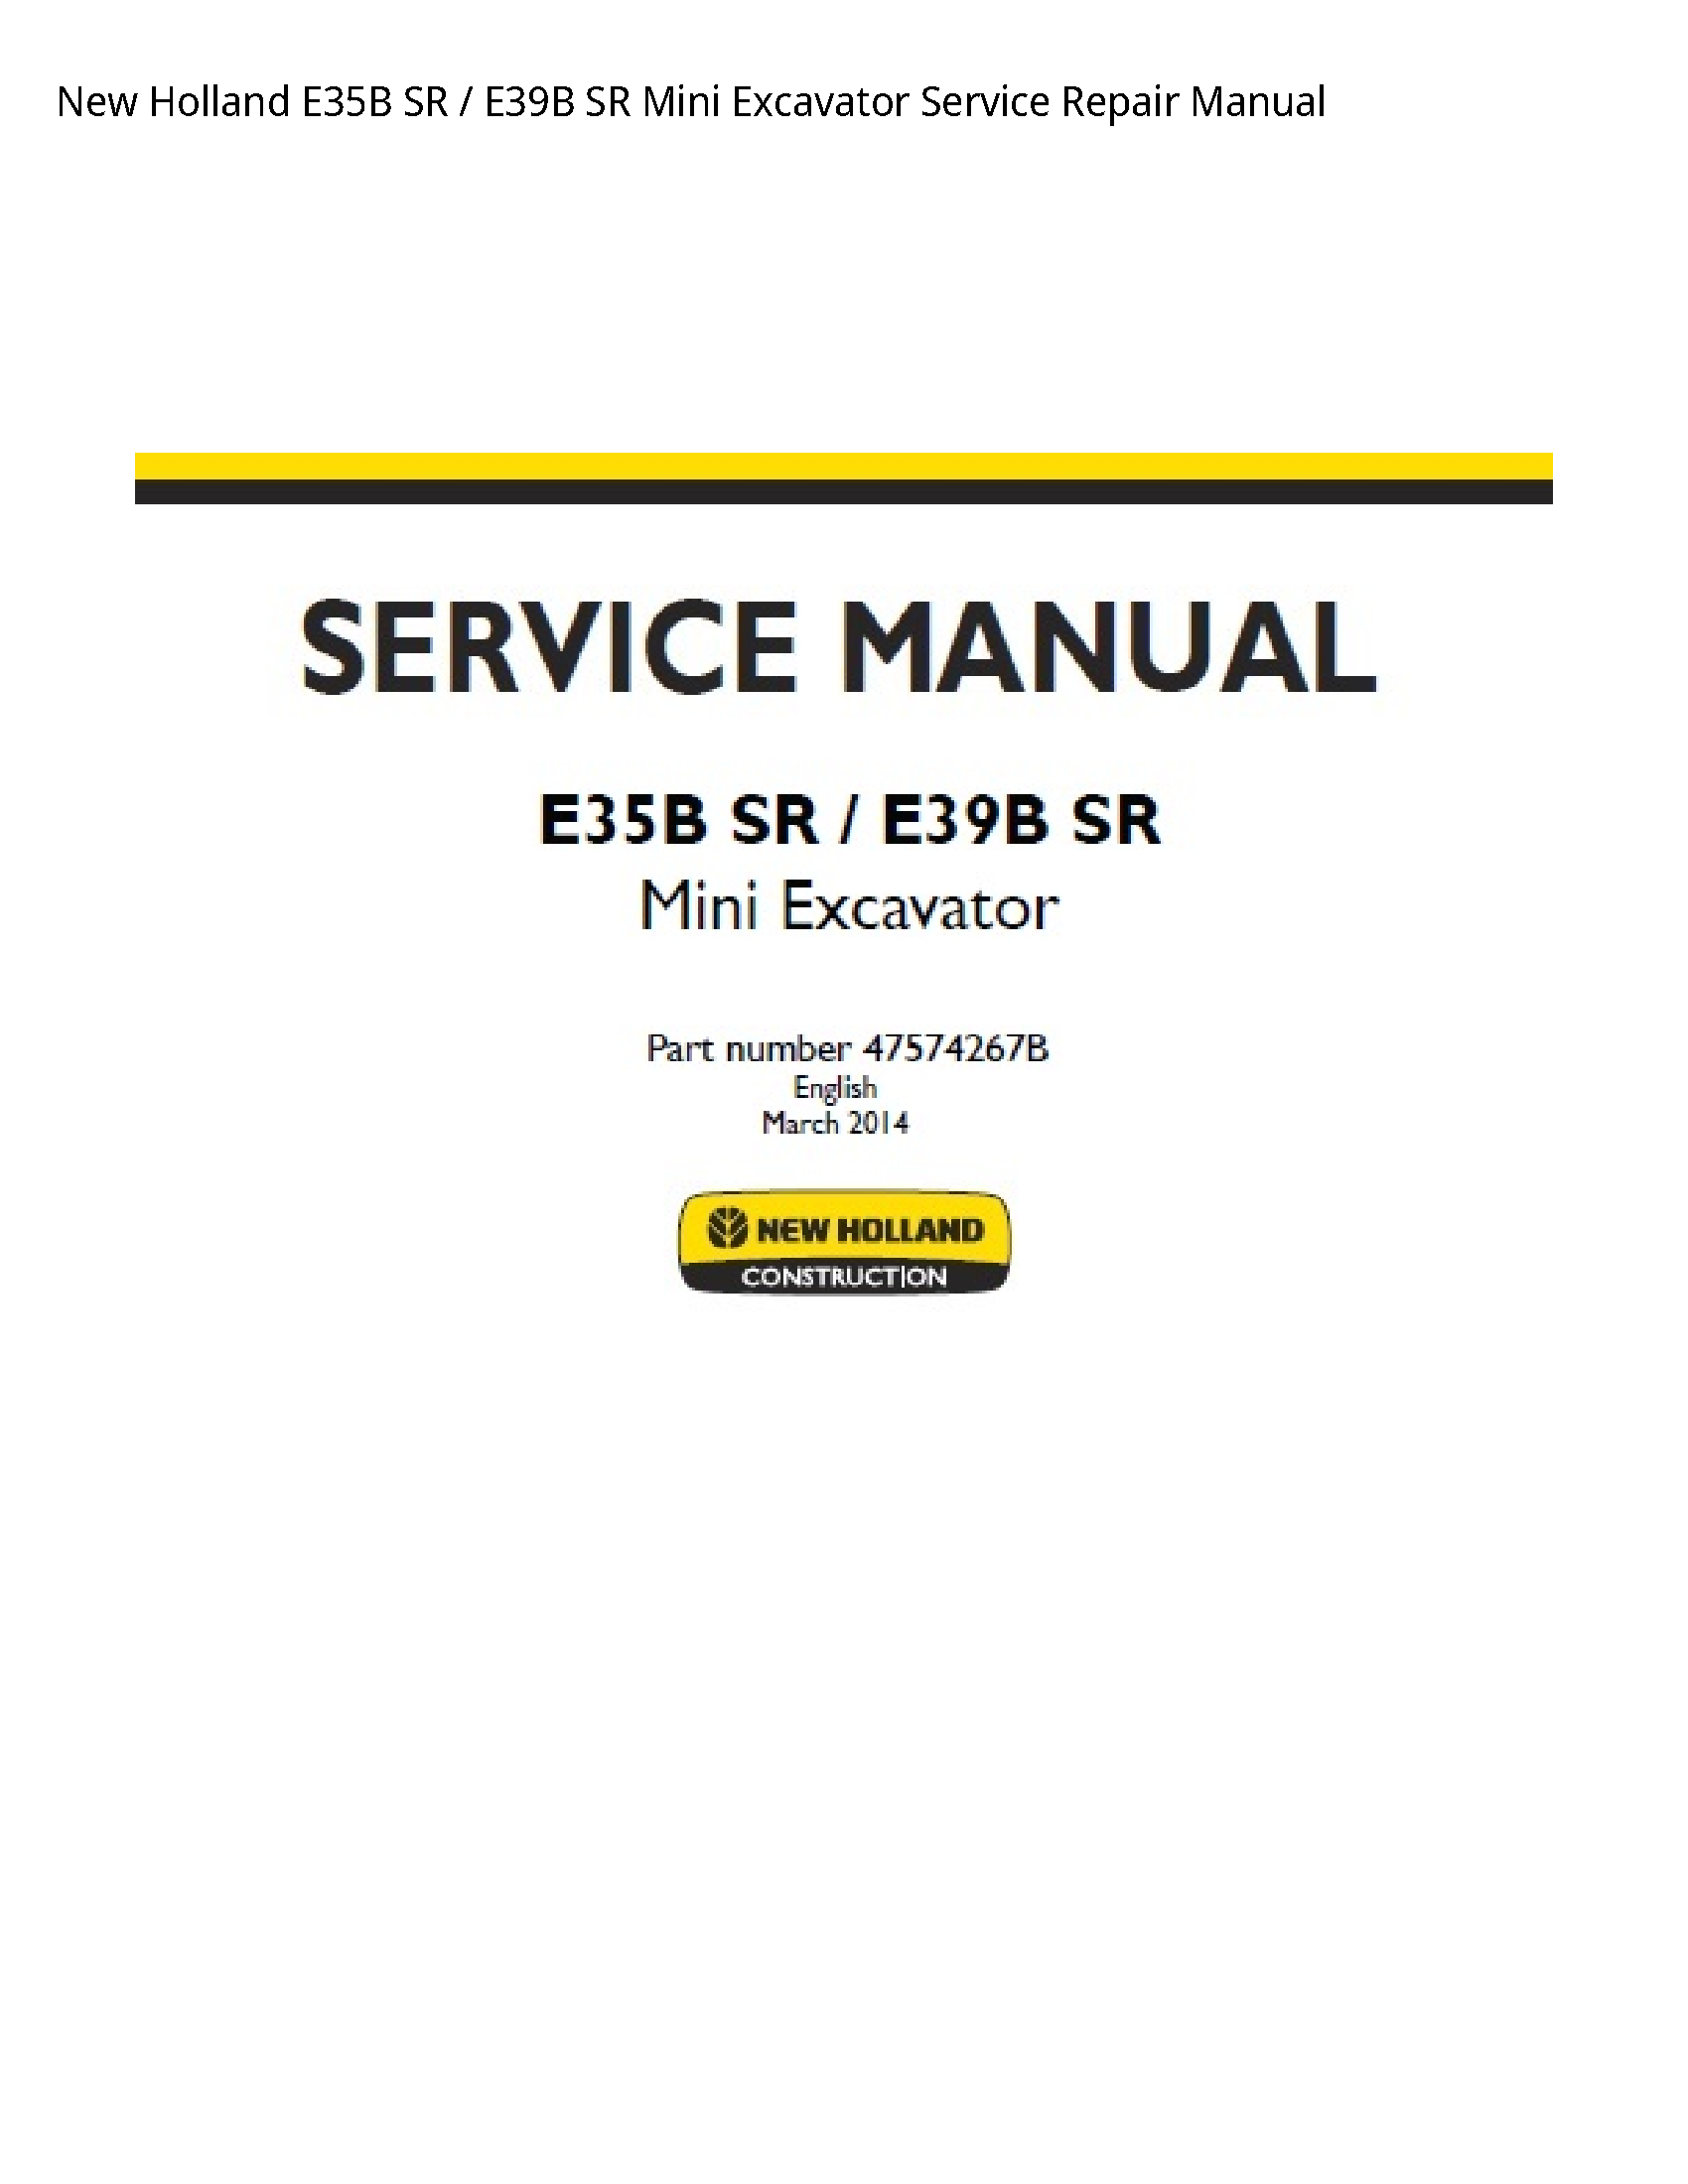 New Holland E35B SR SR Mini Excavator manual